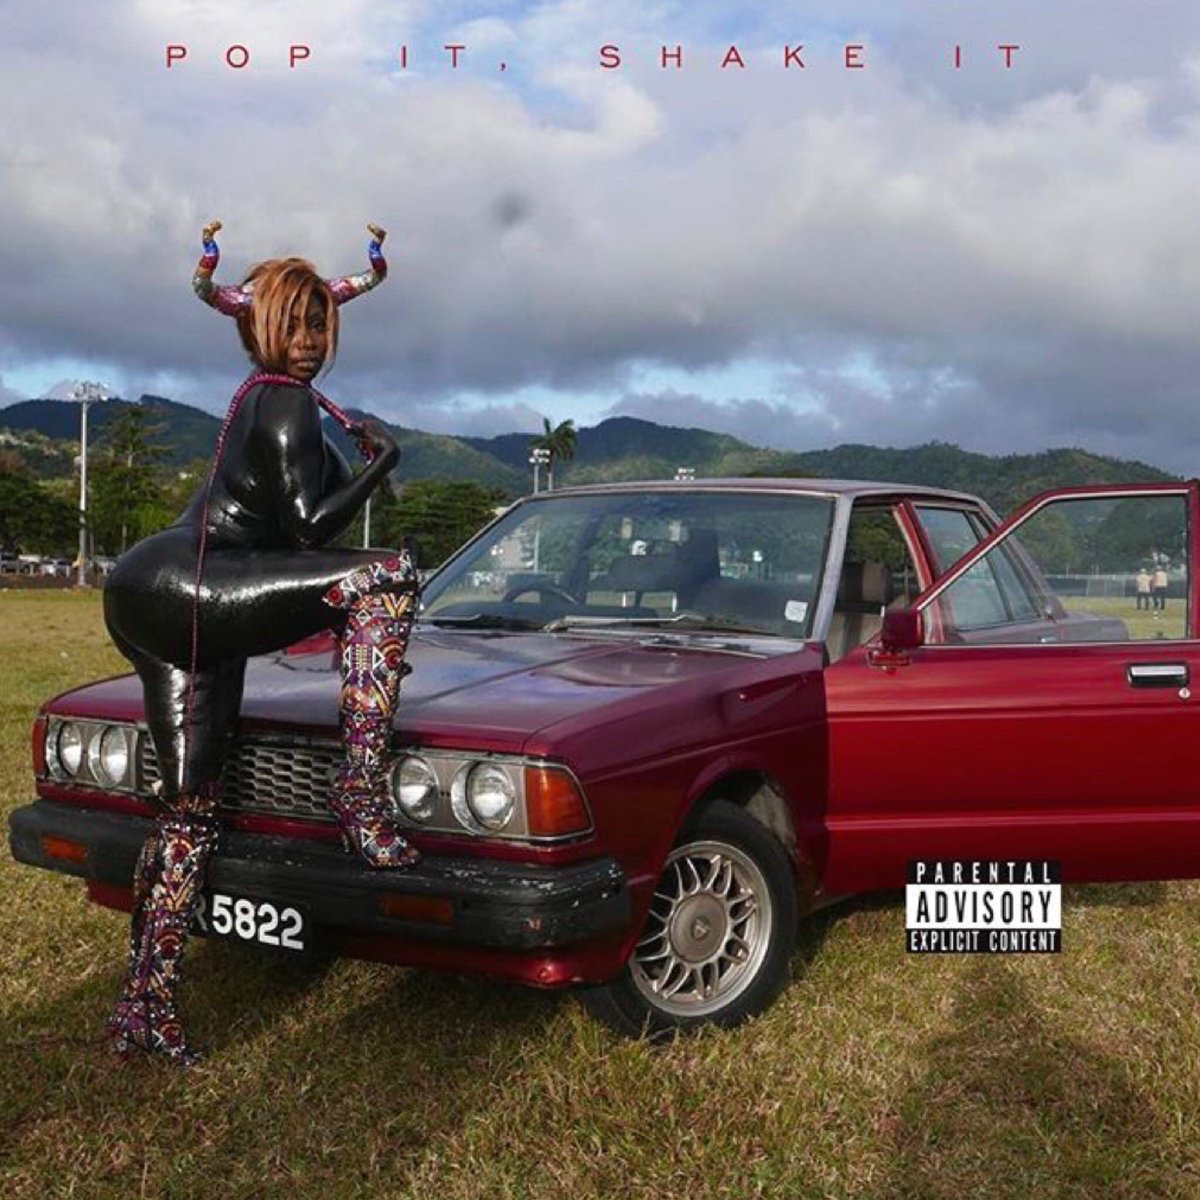 New Music: YG & DJ Mustard – “Pop It, Shake It” [LISTEN]